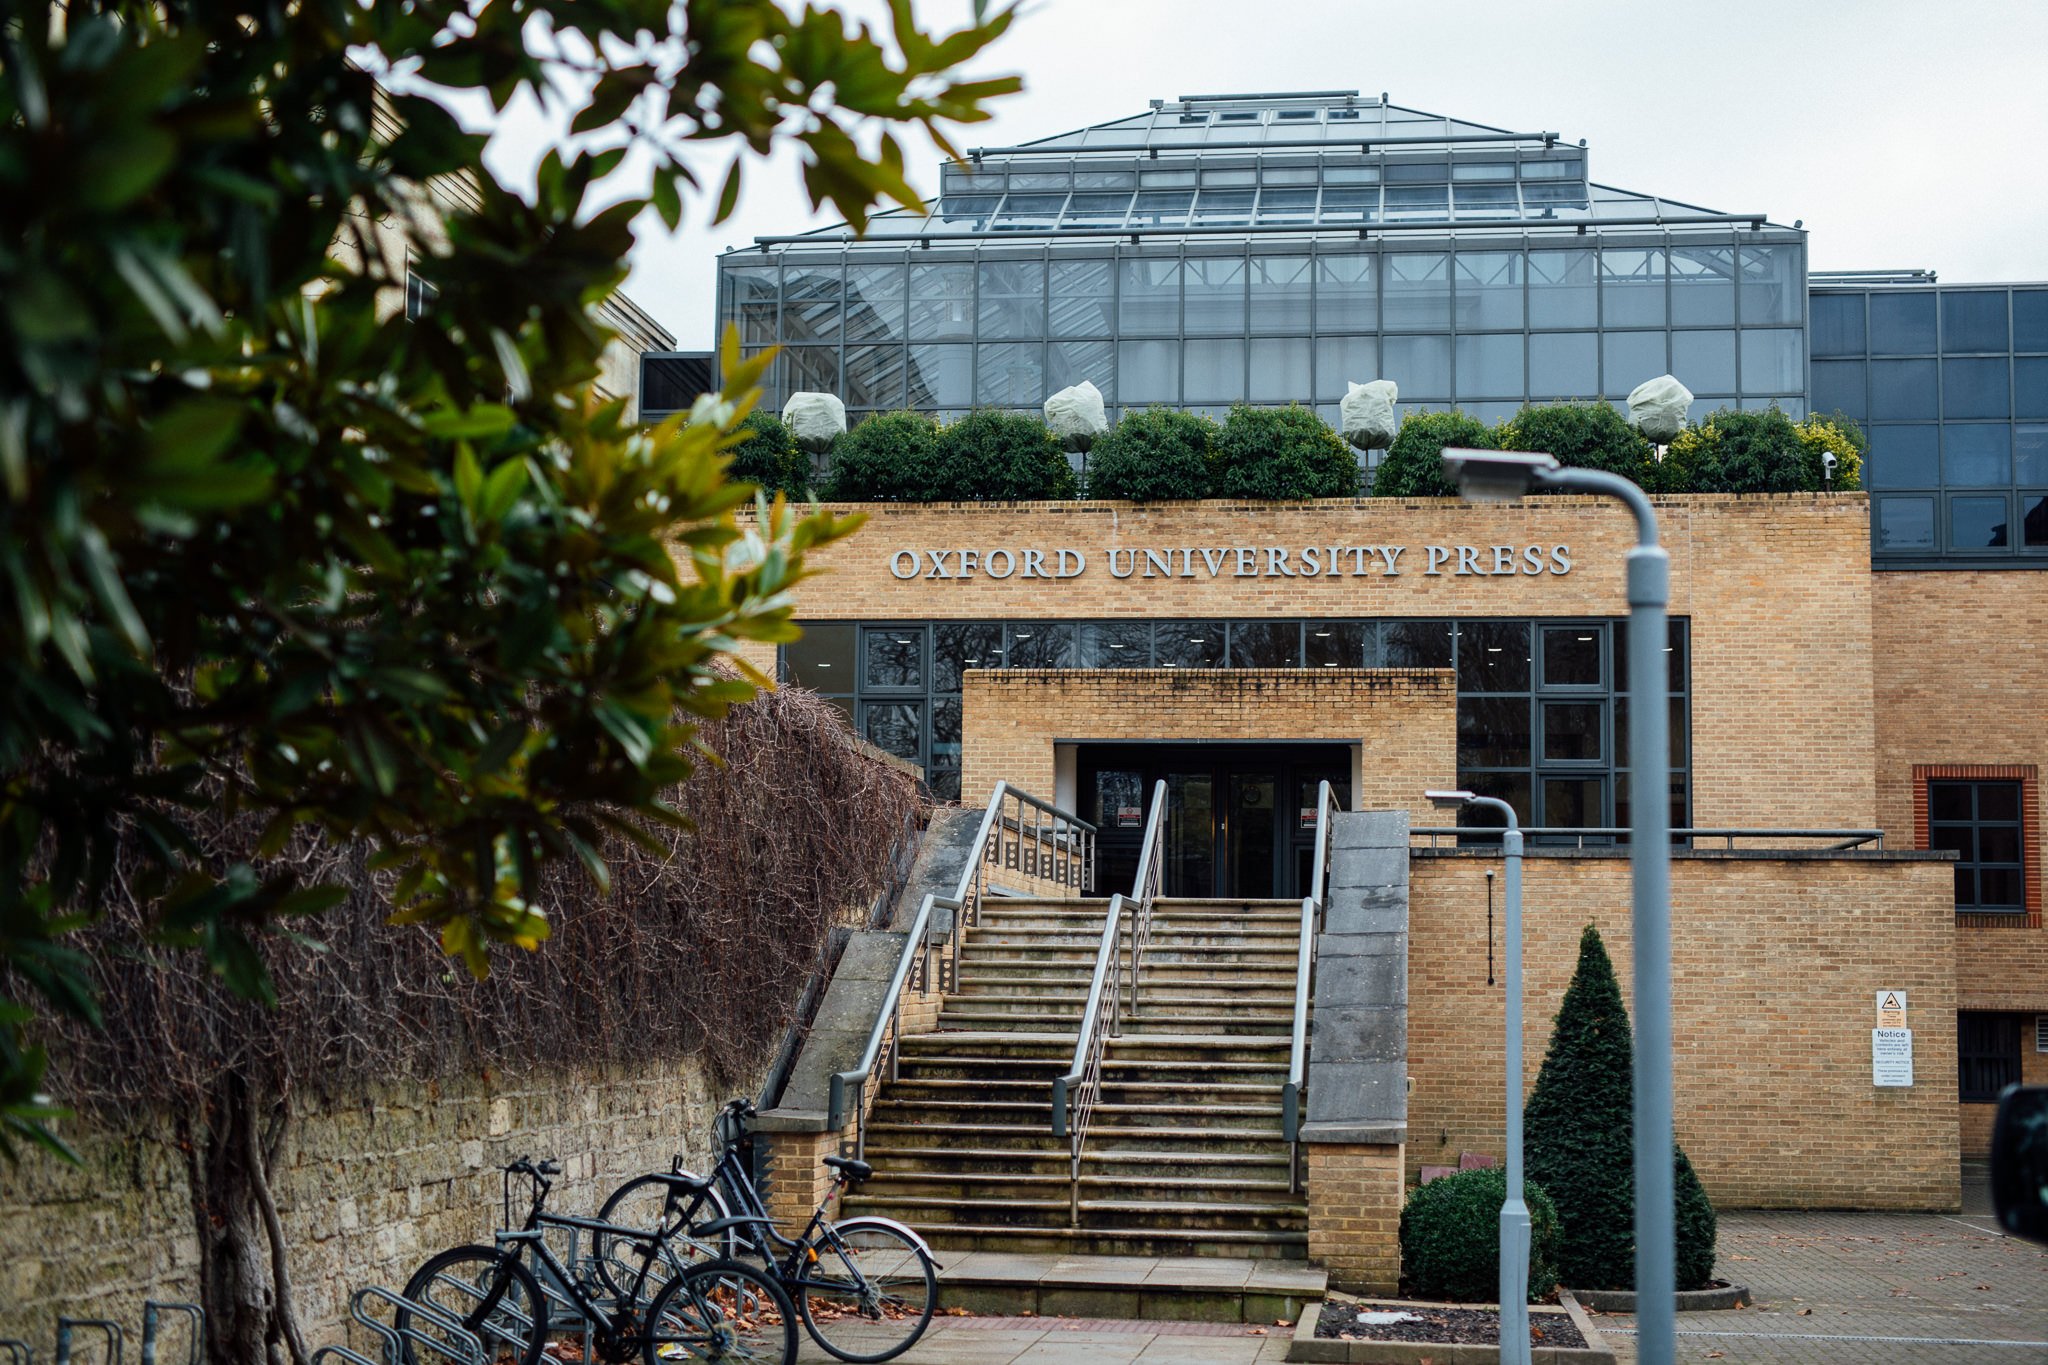  Oxford University Press building 